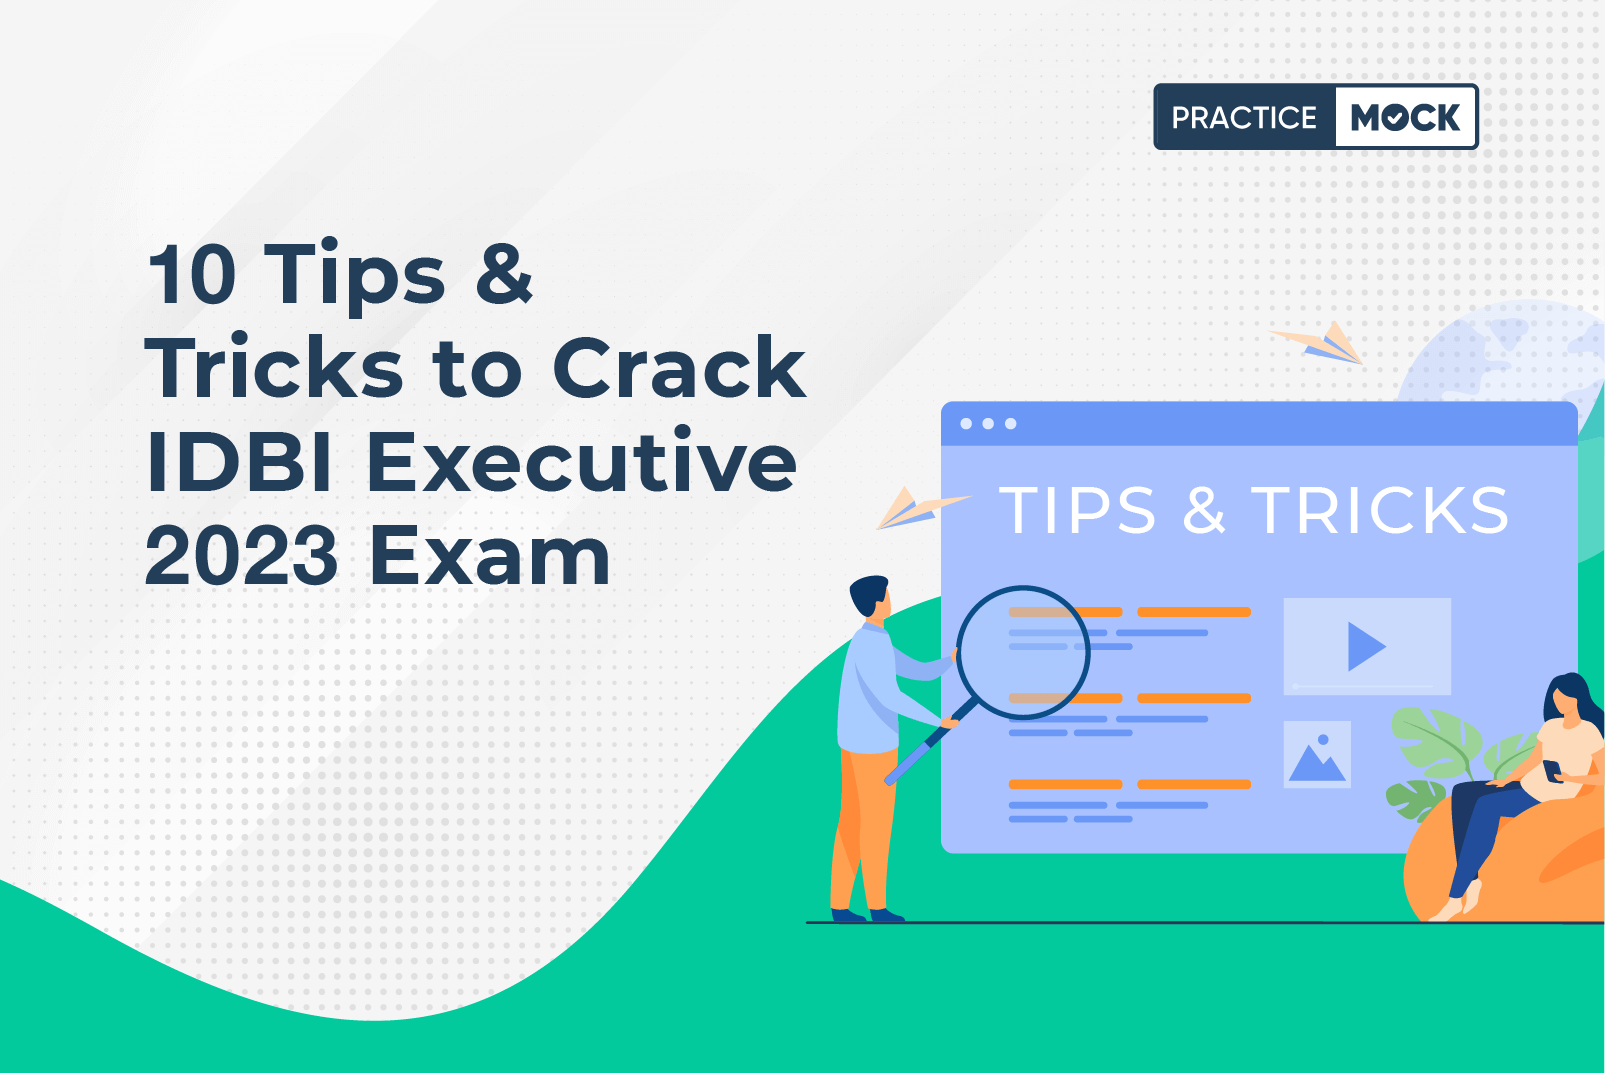 10 Tips & Tricks to Crack IDBI Executive 2023 Exam